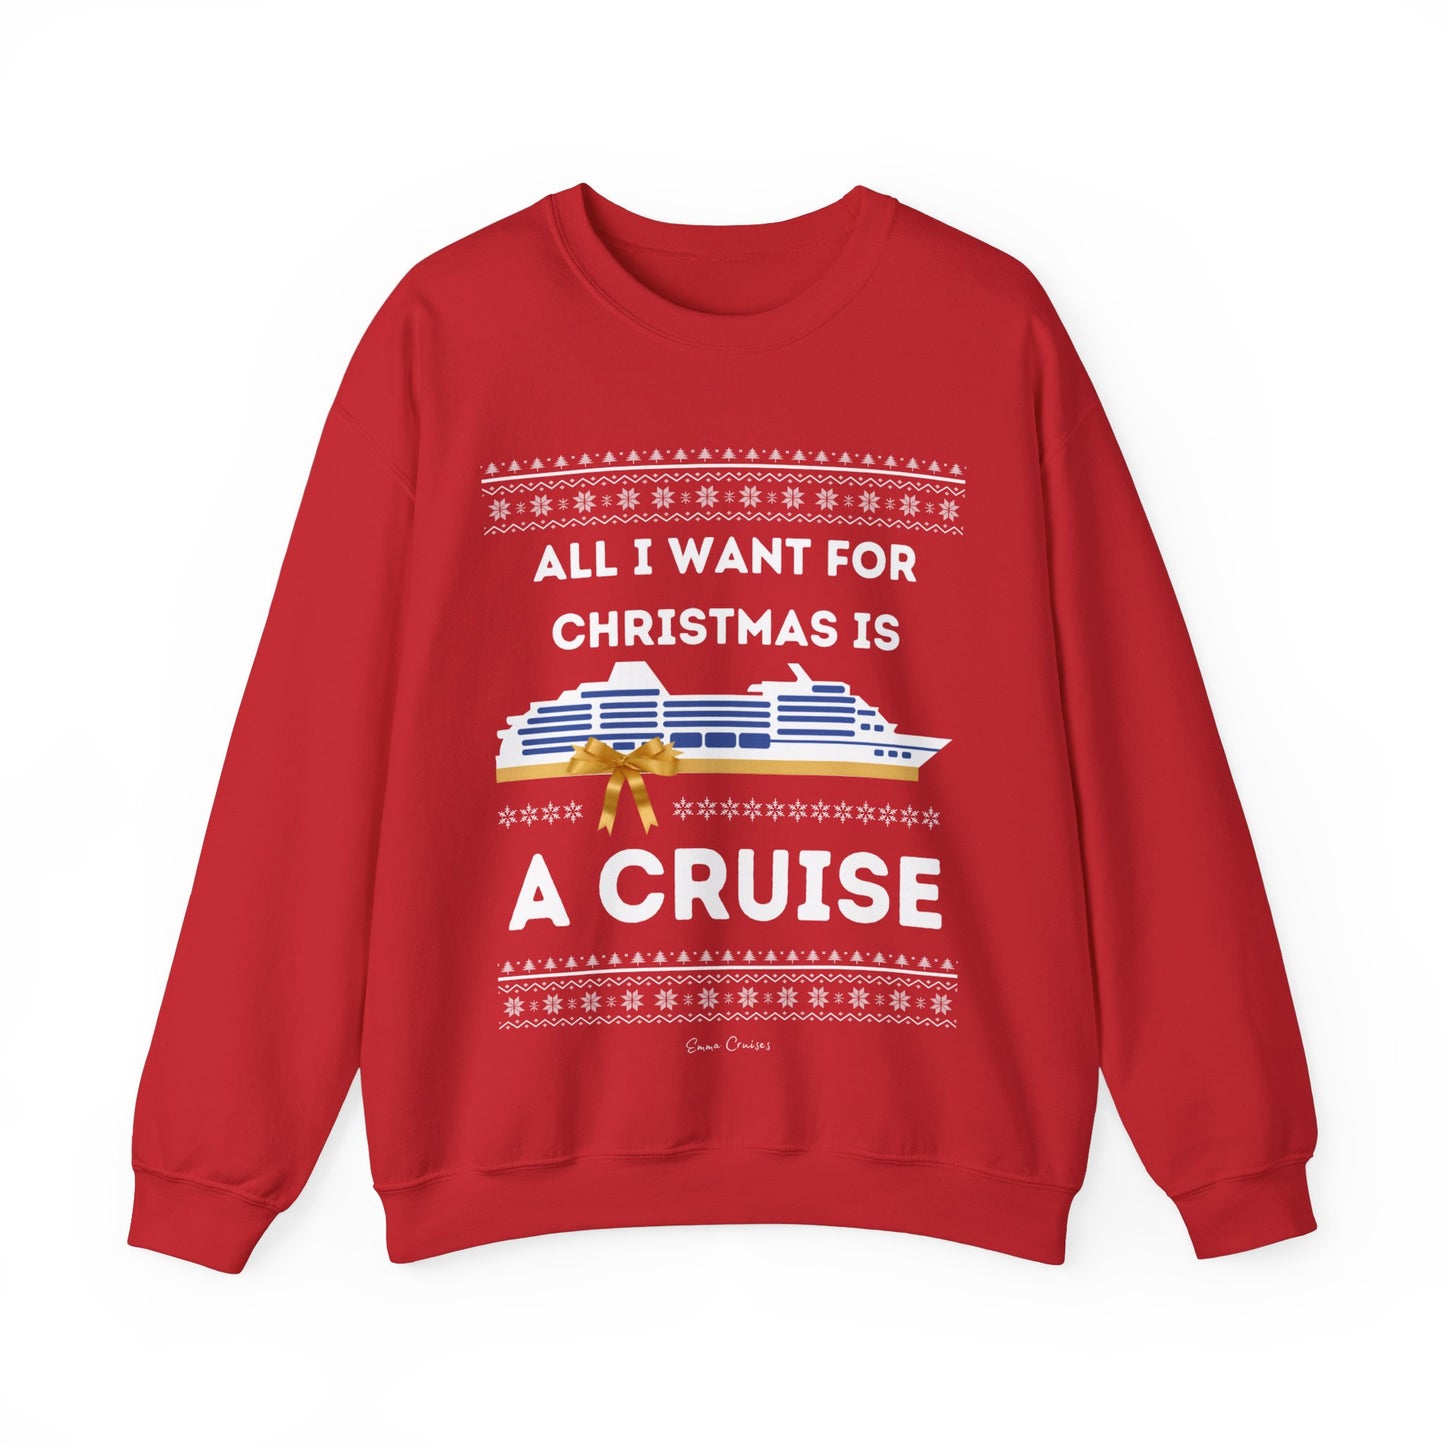 All I Want for Christmas - UNISEX Crewneck Sweatshirt